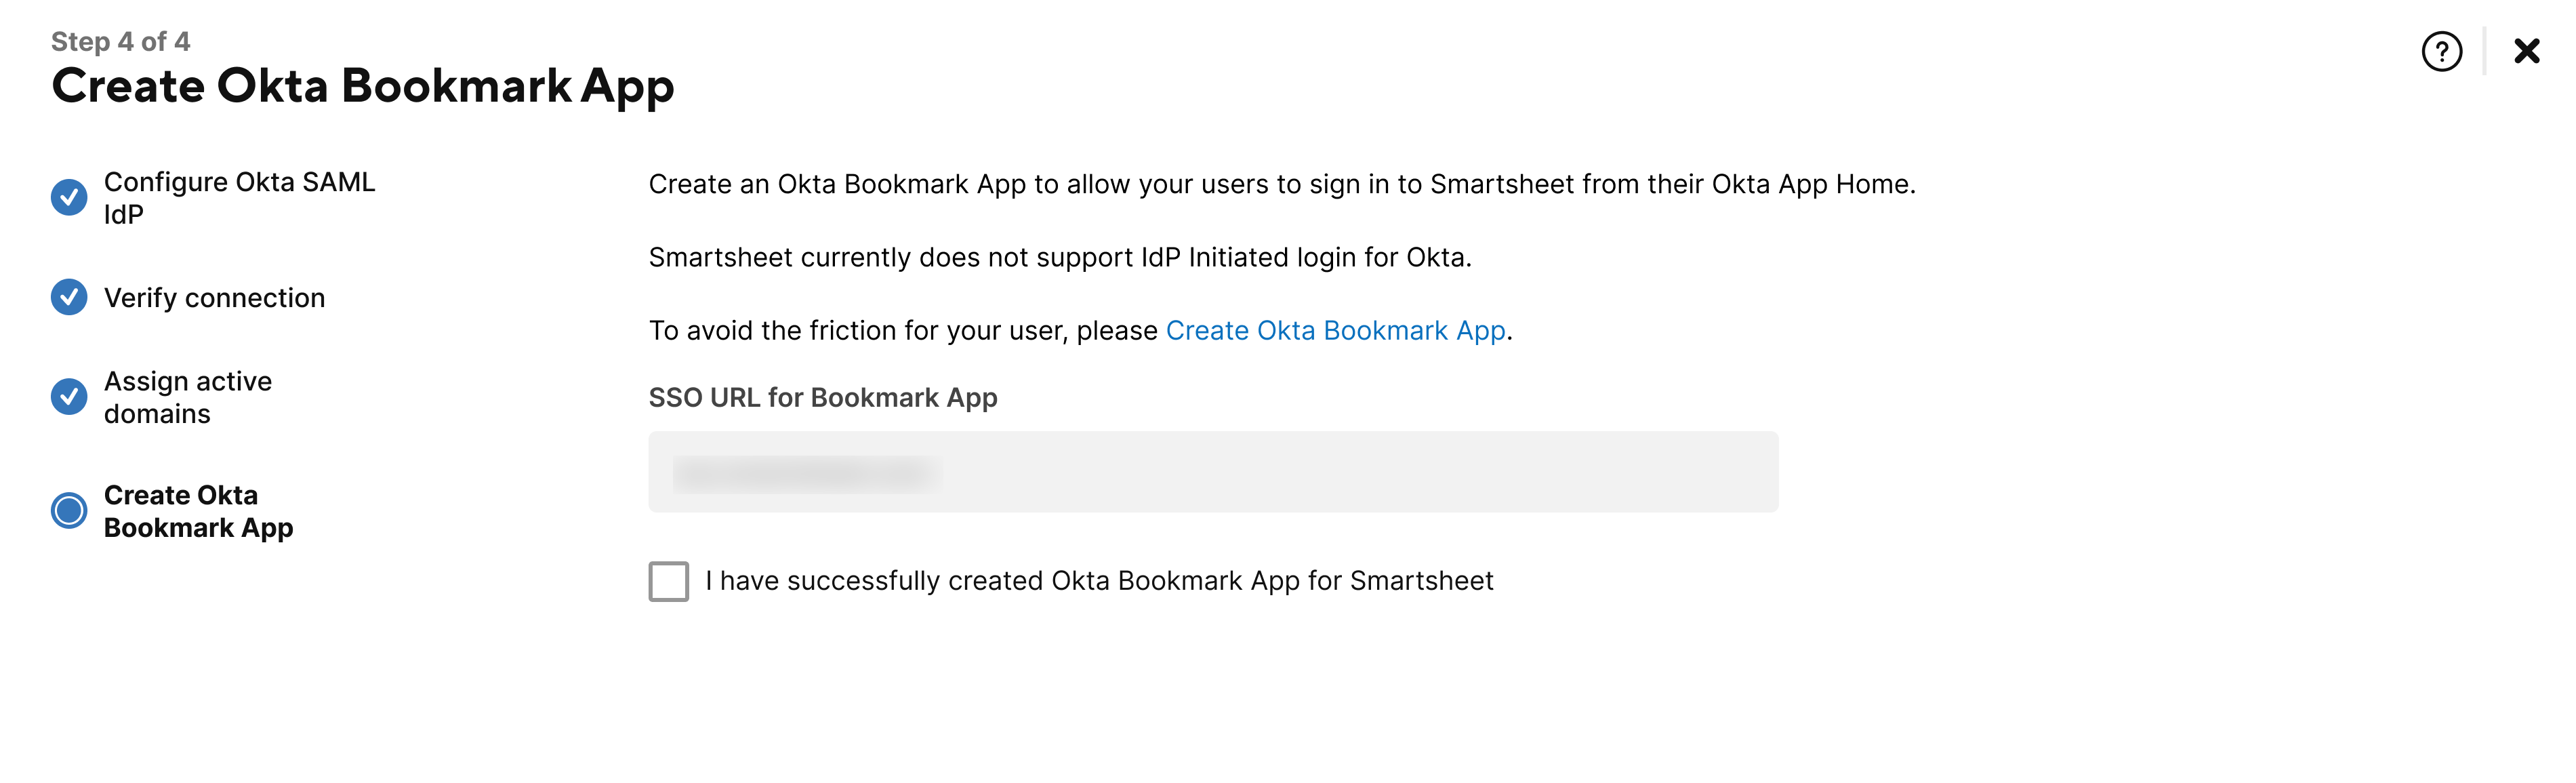 create an Okta bookmark app